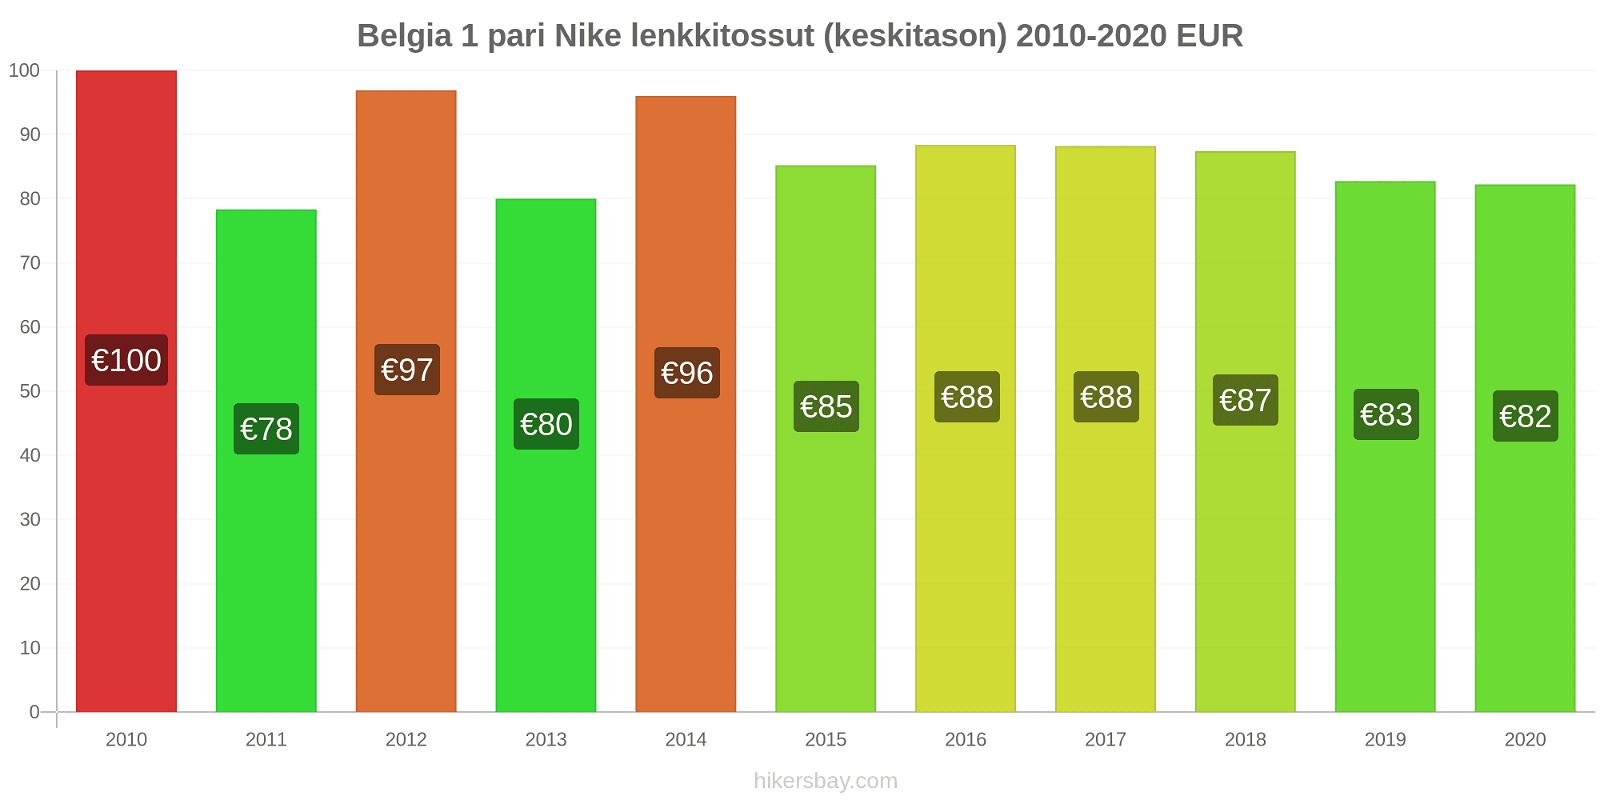 Belgia hintojen muutokset 1 pari Nike lenkkitossut (keskitason) hikersbay.com